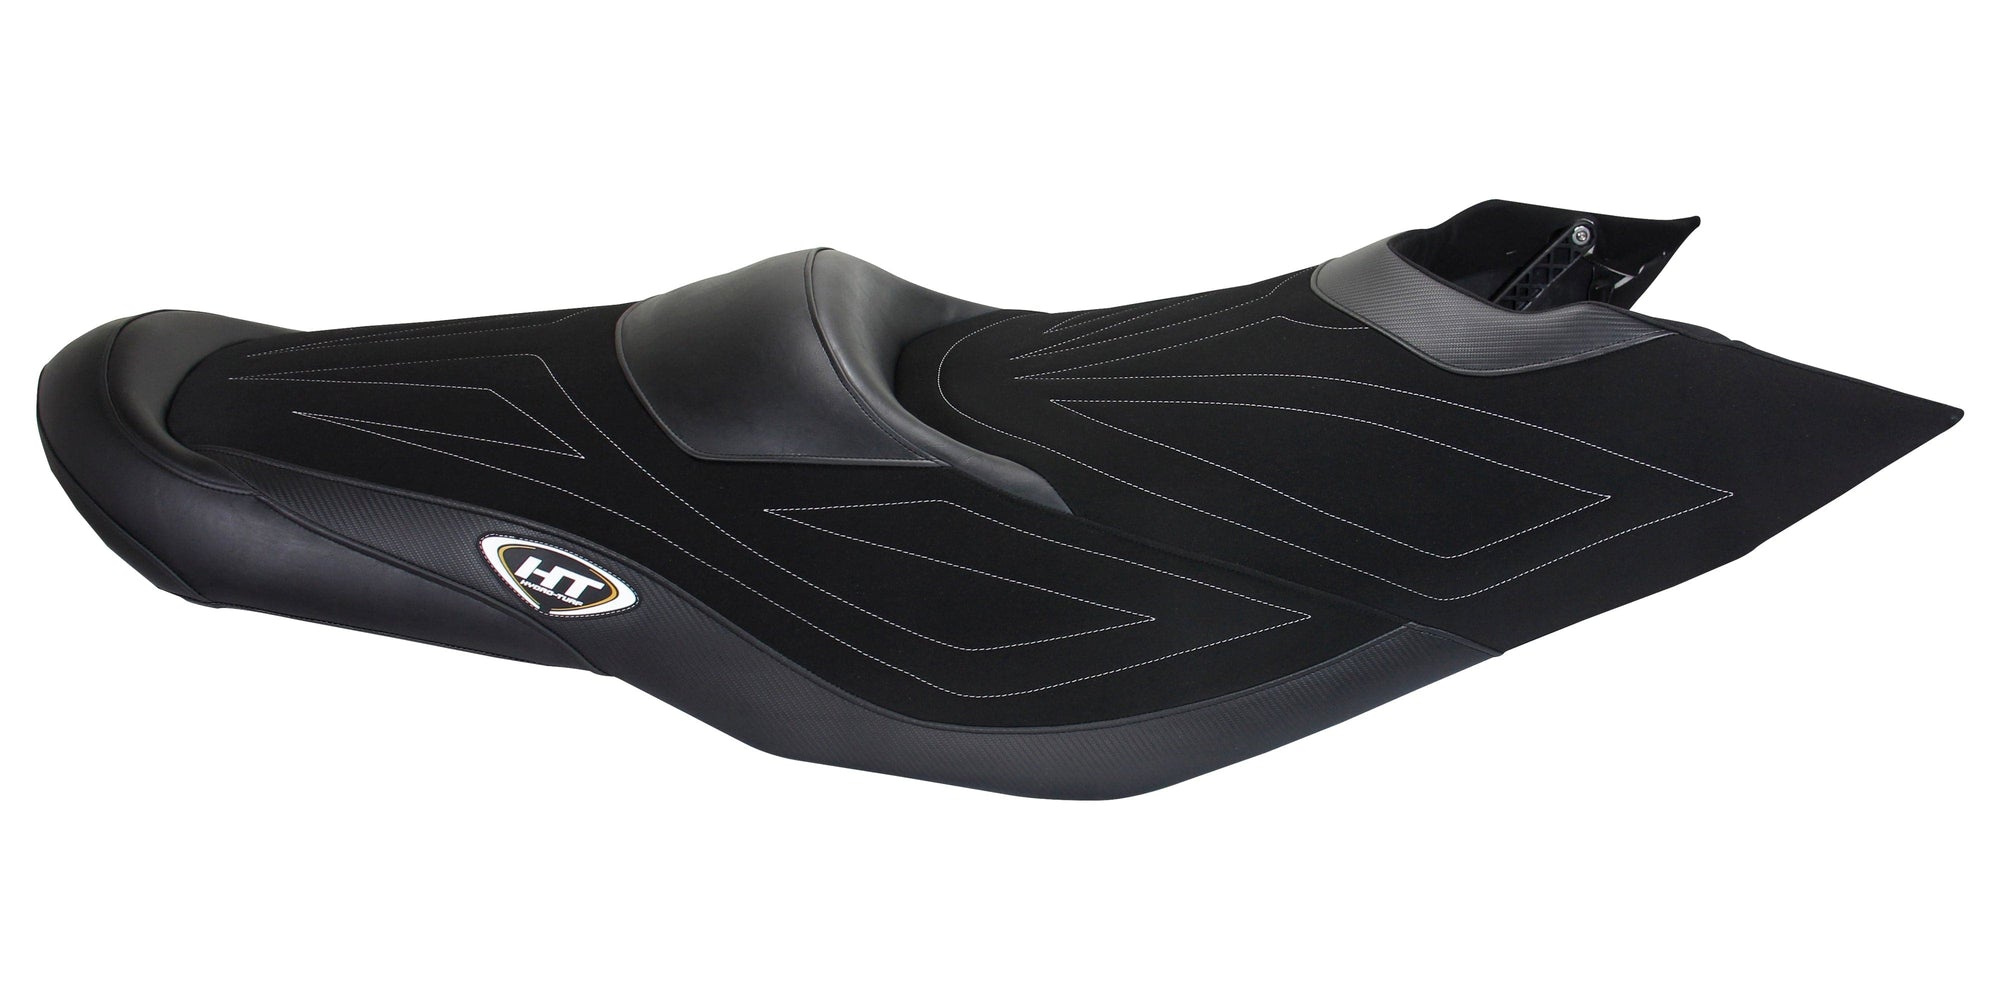 Hydro-Turf Premier Seat Cover for Sea Doo GTX Ltd iS (09-15) / GTX 155 / GTX 215 (10-15) Colorway A